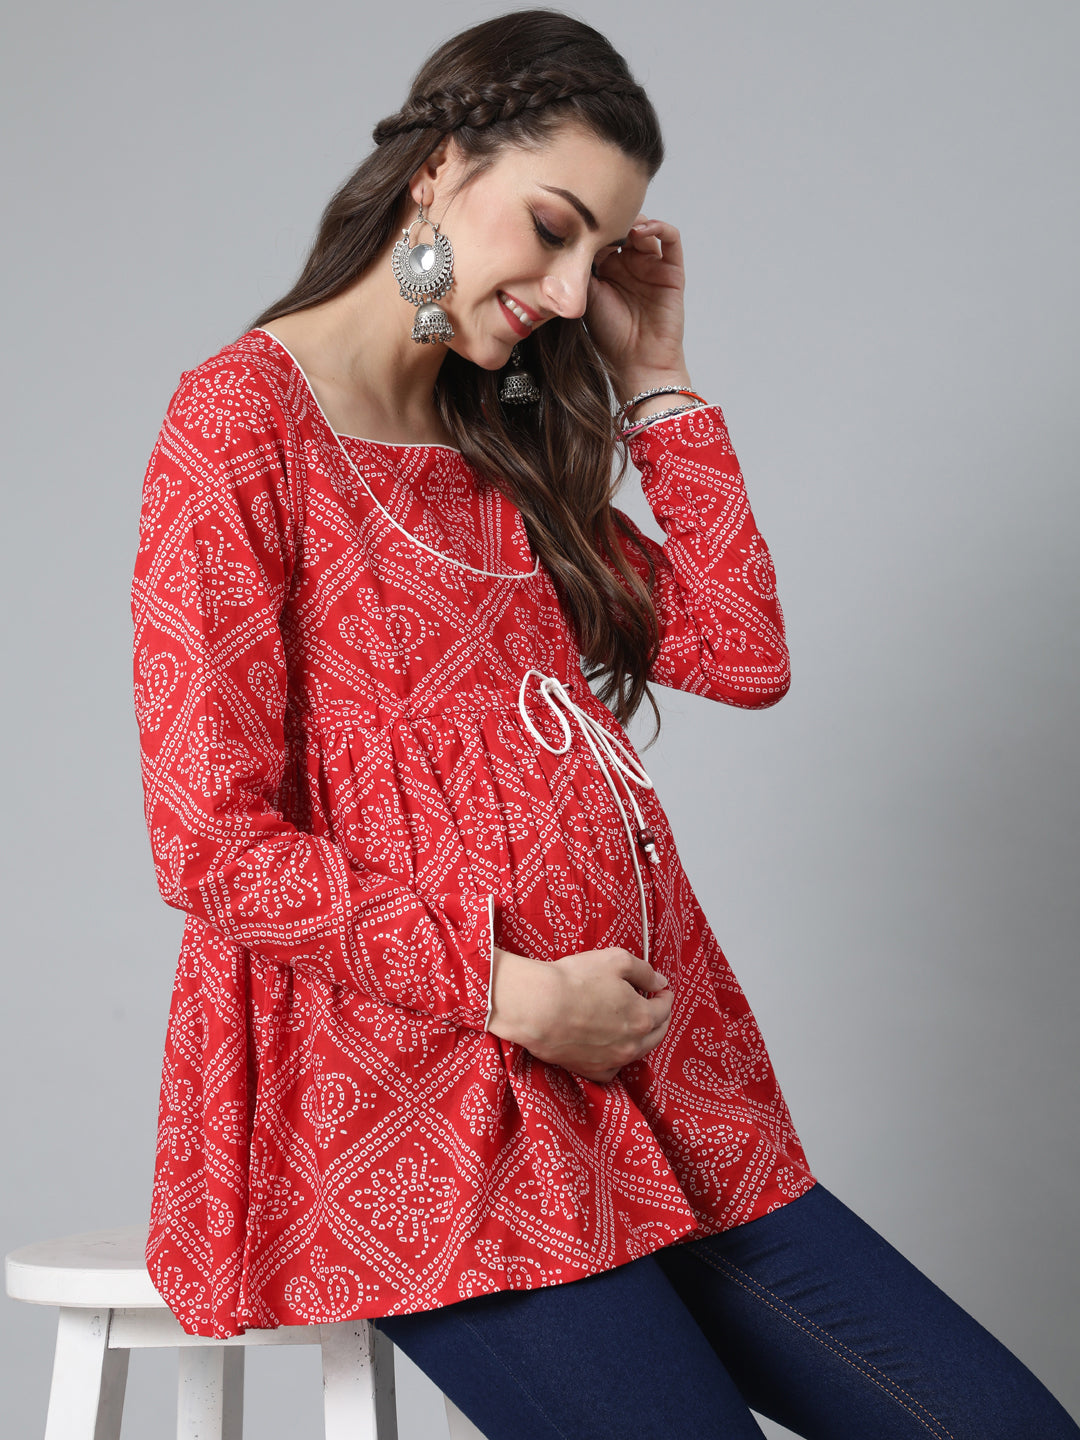 Women's Red Bandhani Print Maternity Tunic - Aks